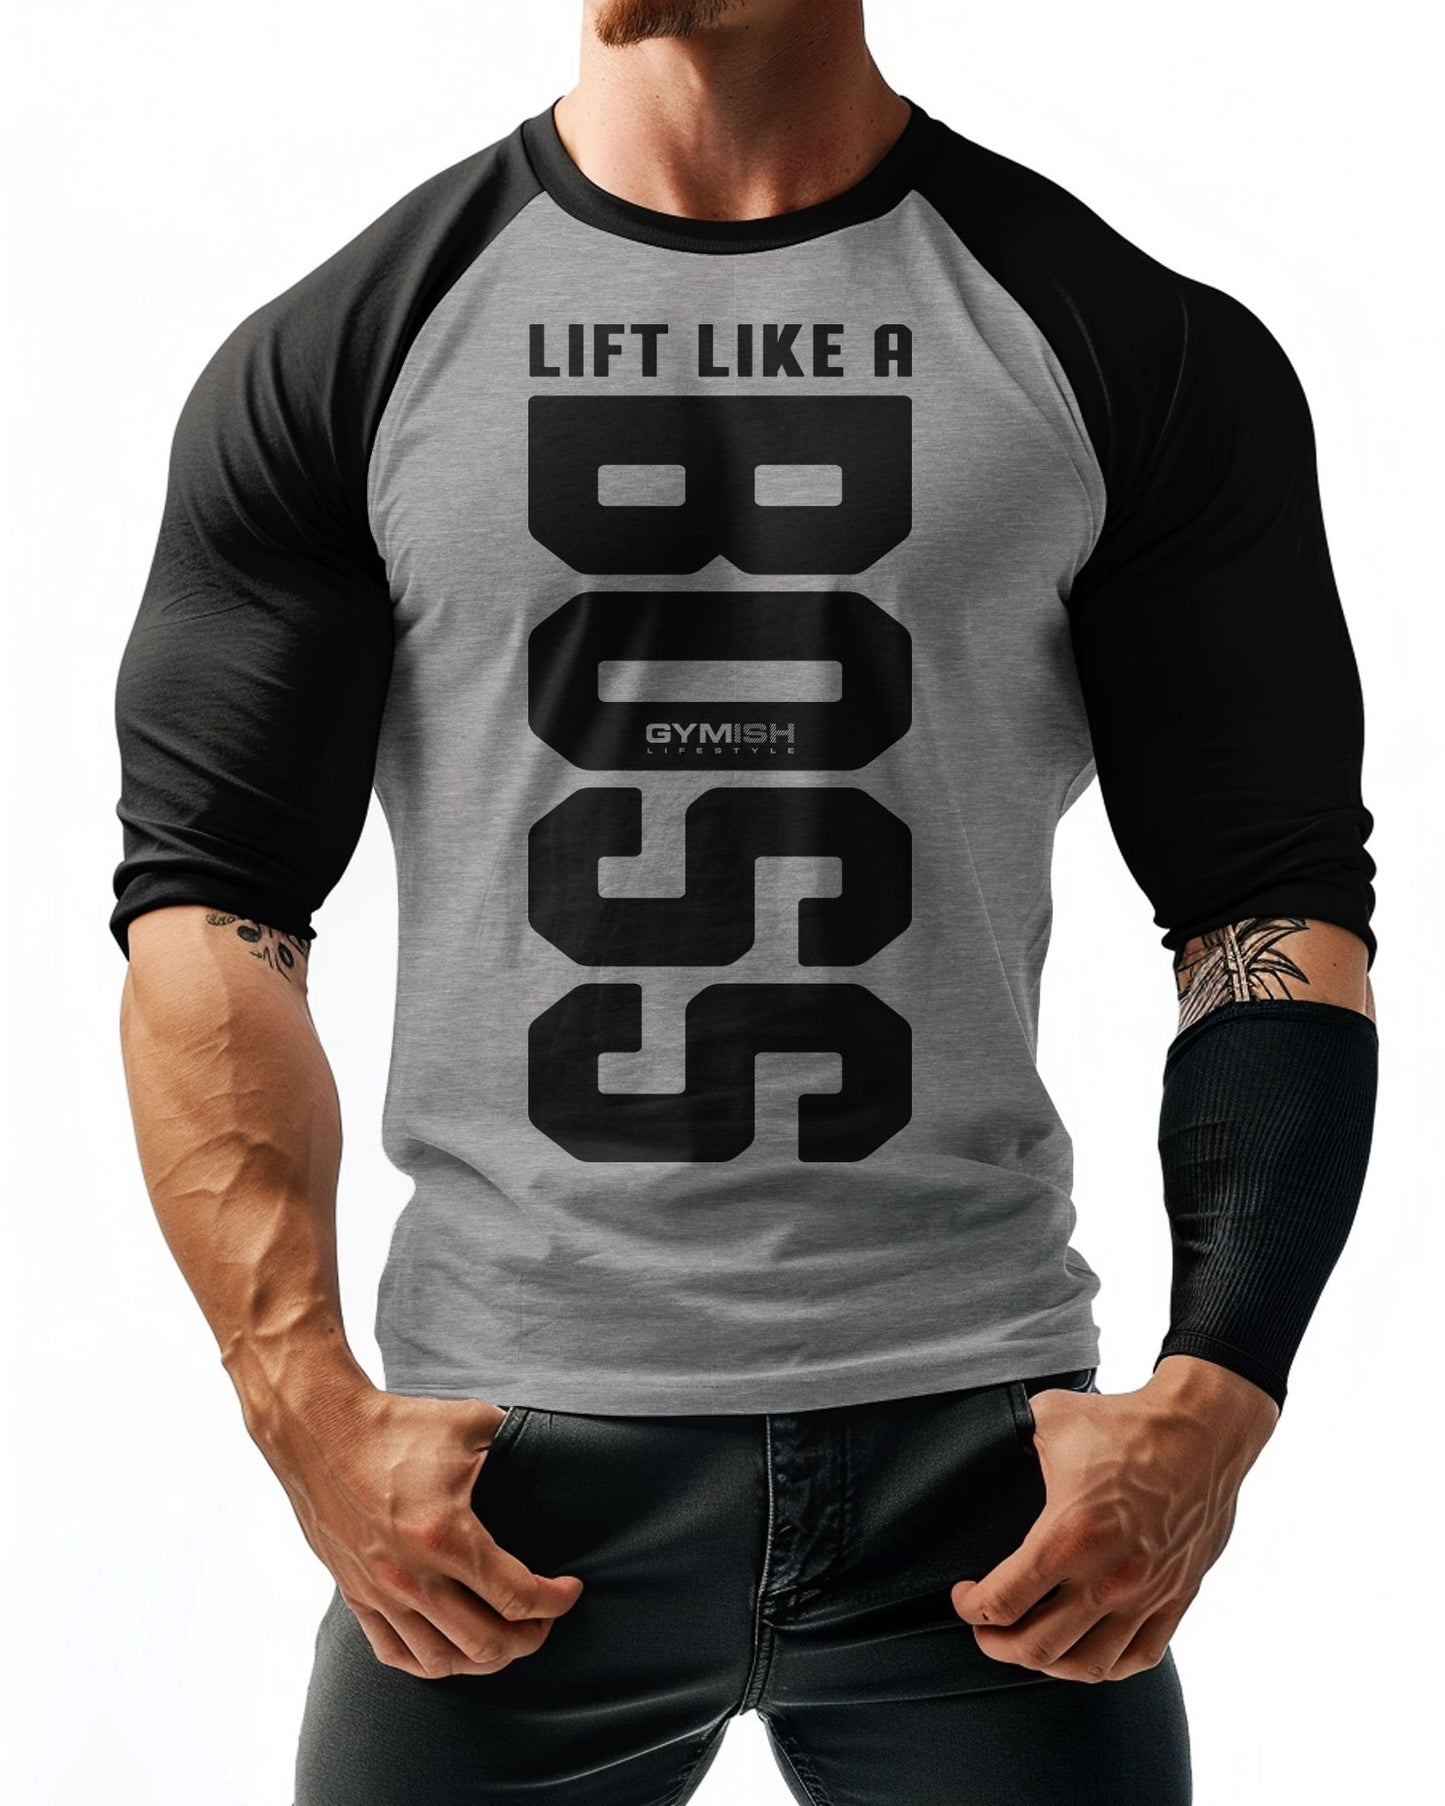 12- RAGLAN Lift Like a Boss Workout Gym T-Shirt for Men